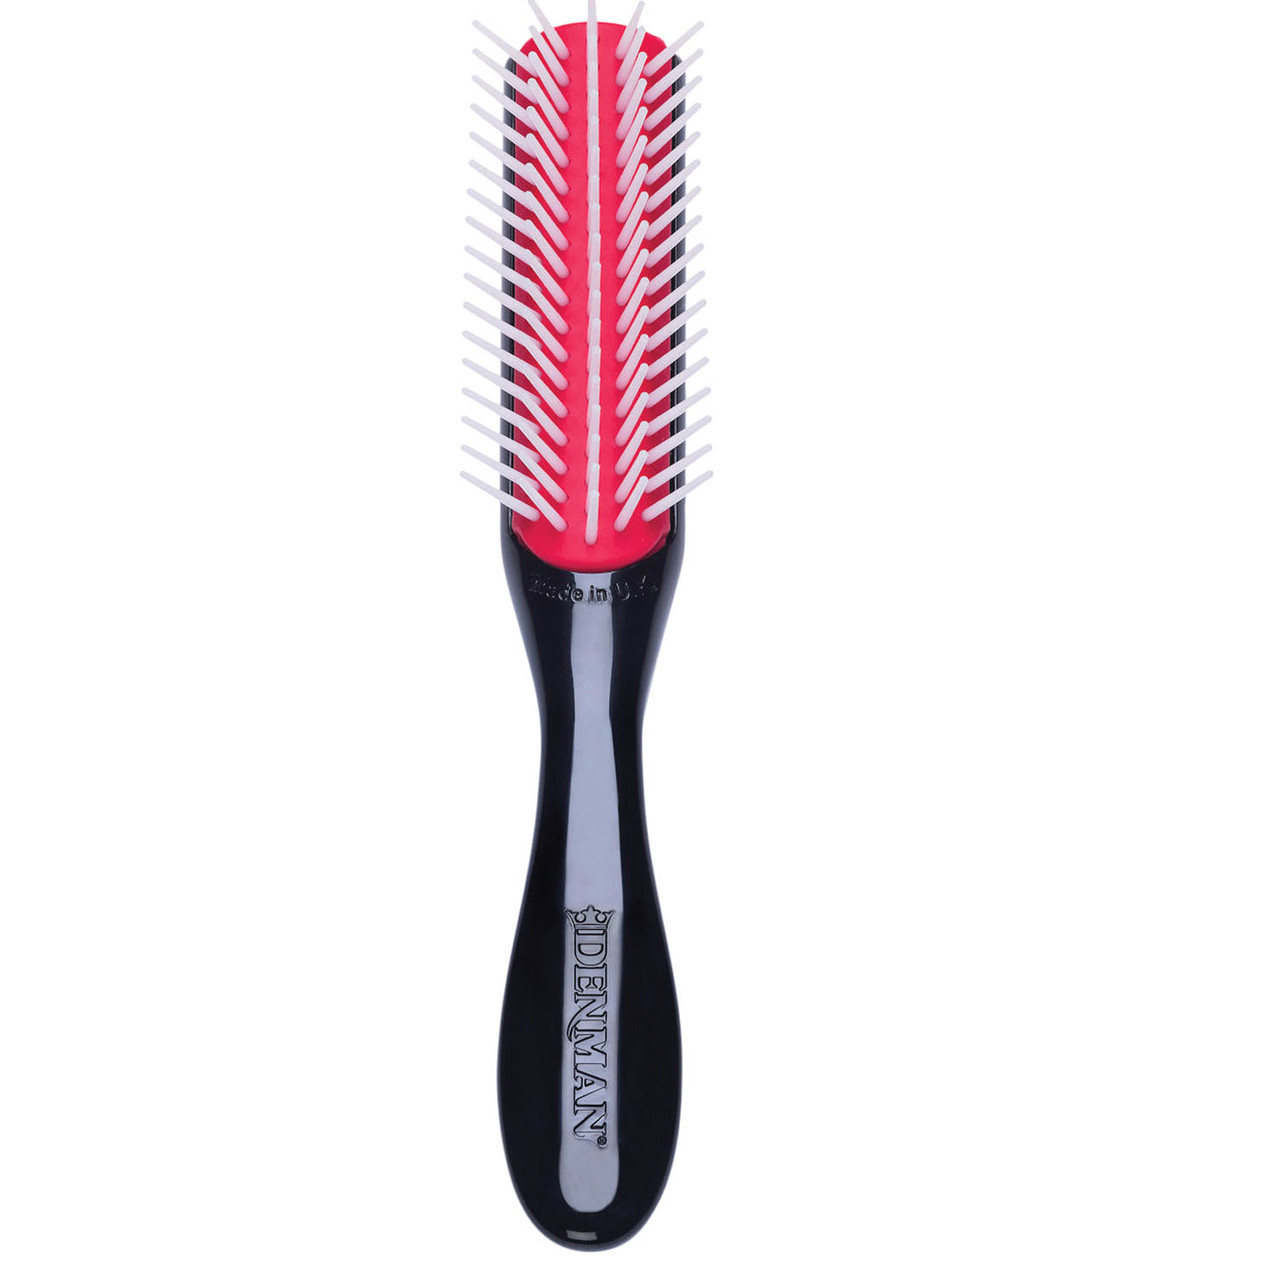 Ship Shape Comb & Brush Cleaner - Boss Beauty Supply